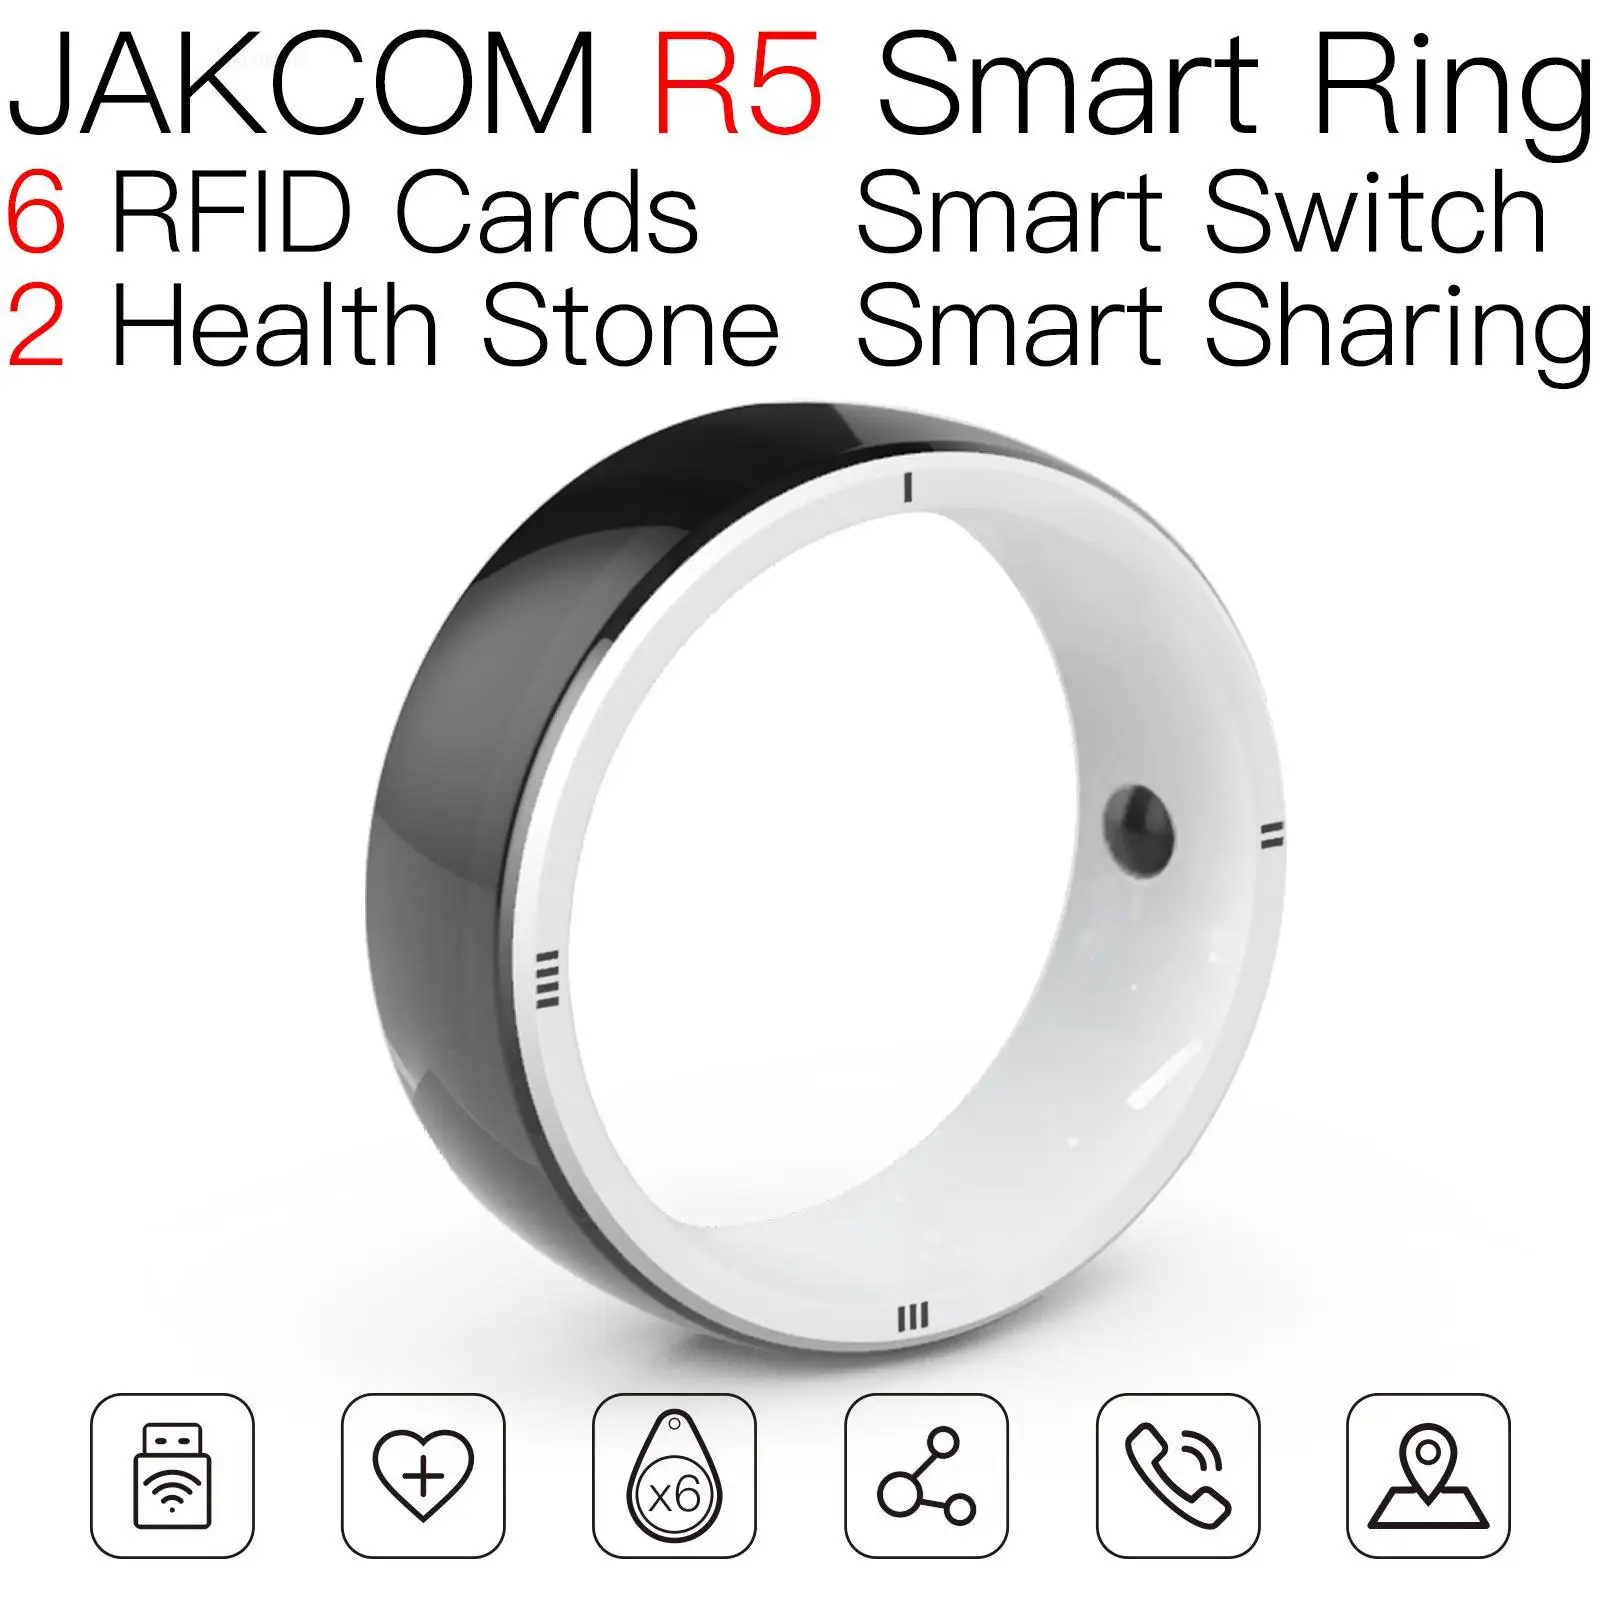 

JAKCOM R5 Smart Ring Newer than concrete badge rfid modifiable nfc karte protection super t5577 flex pig tags module